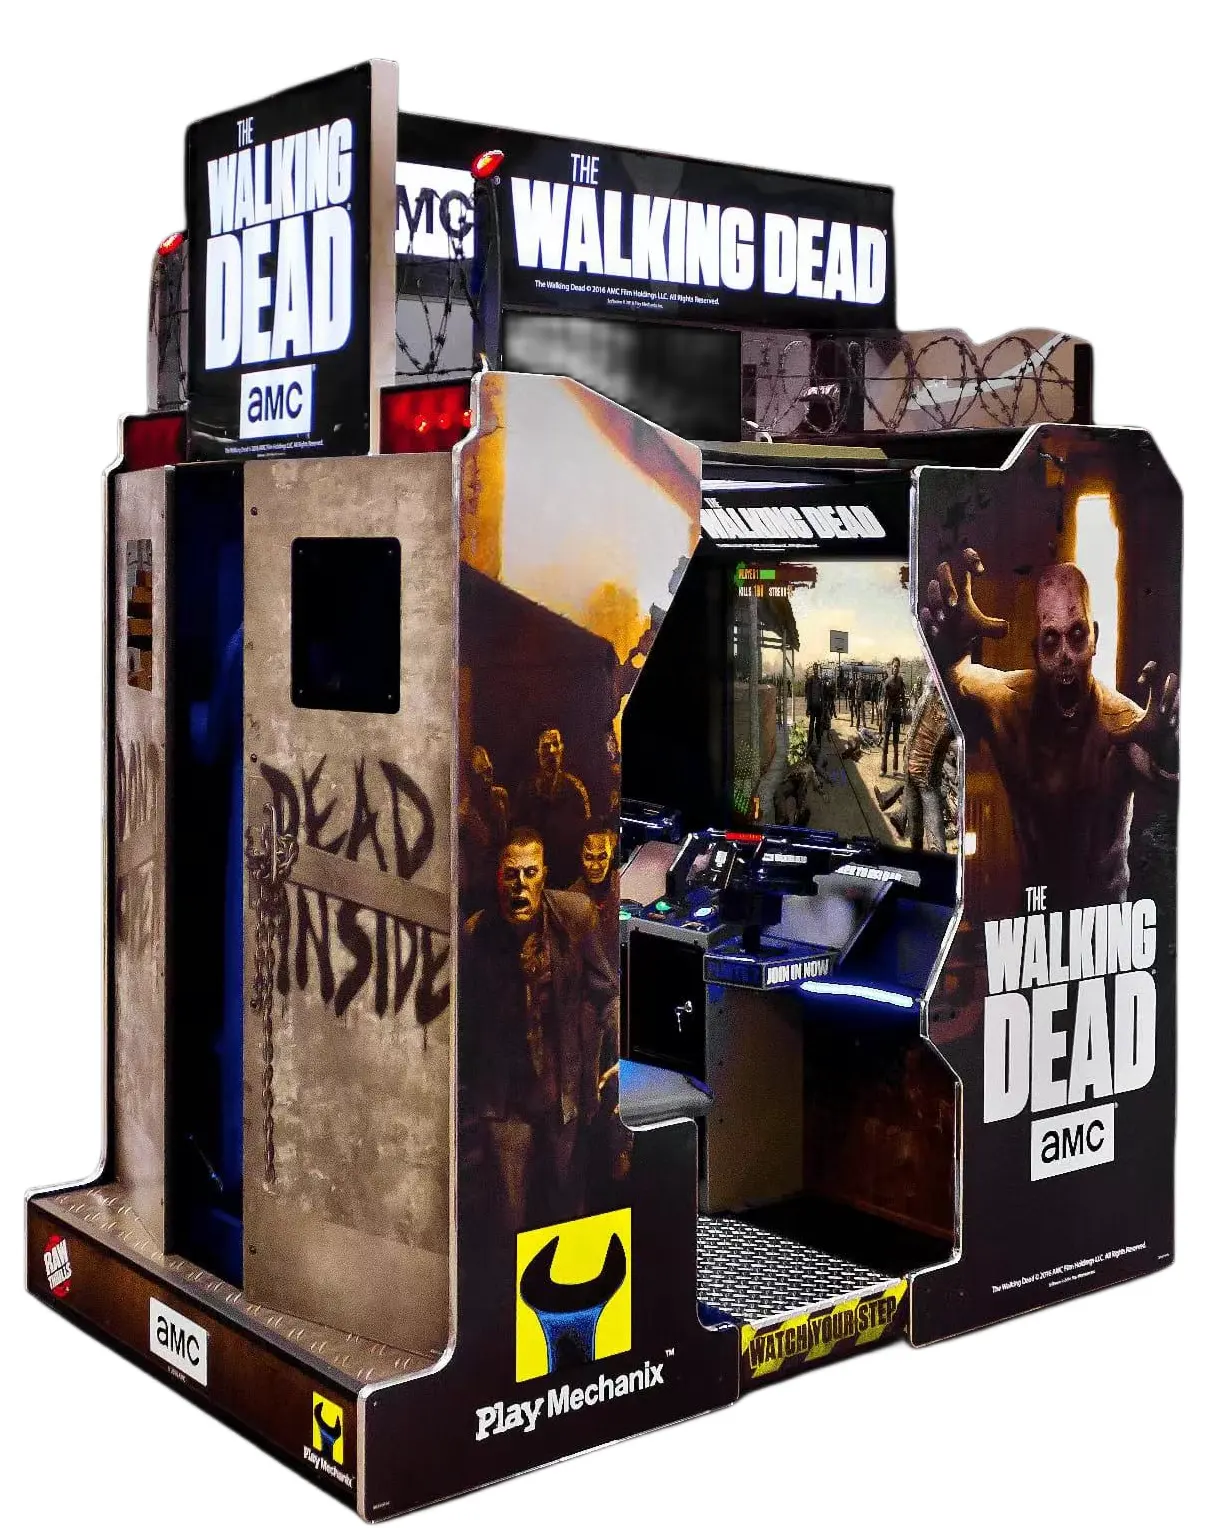 The Walking Dead Coin Operated Machine arcade Game Machine Indoor dinosaur shooting game machine